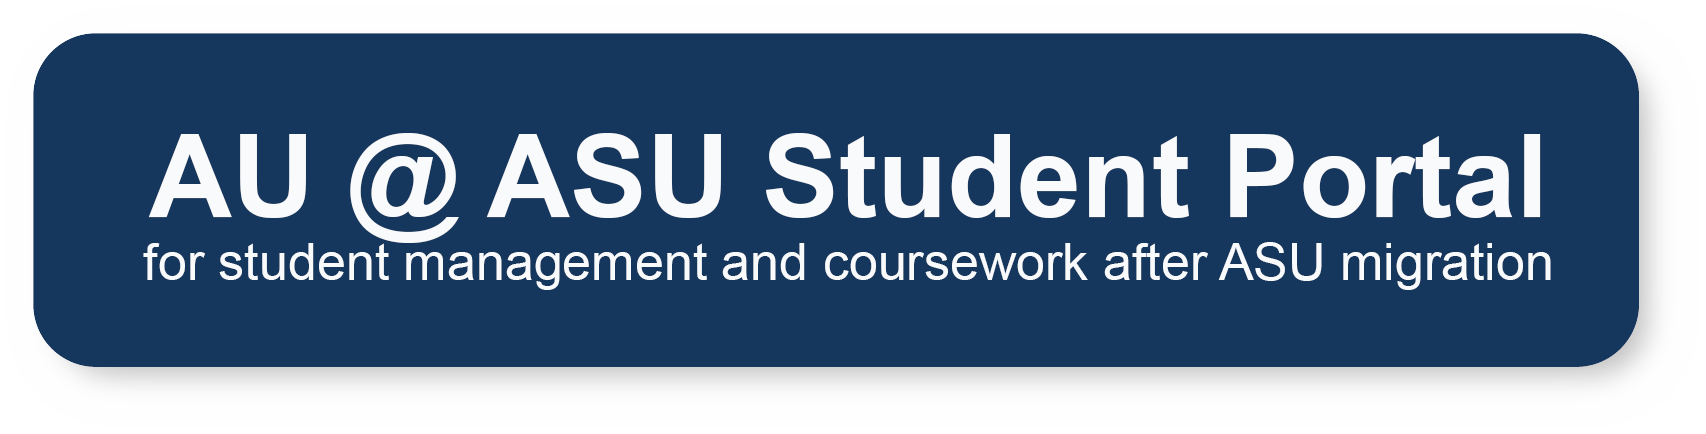 AU @ ASU Student Portal